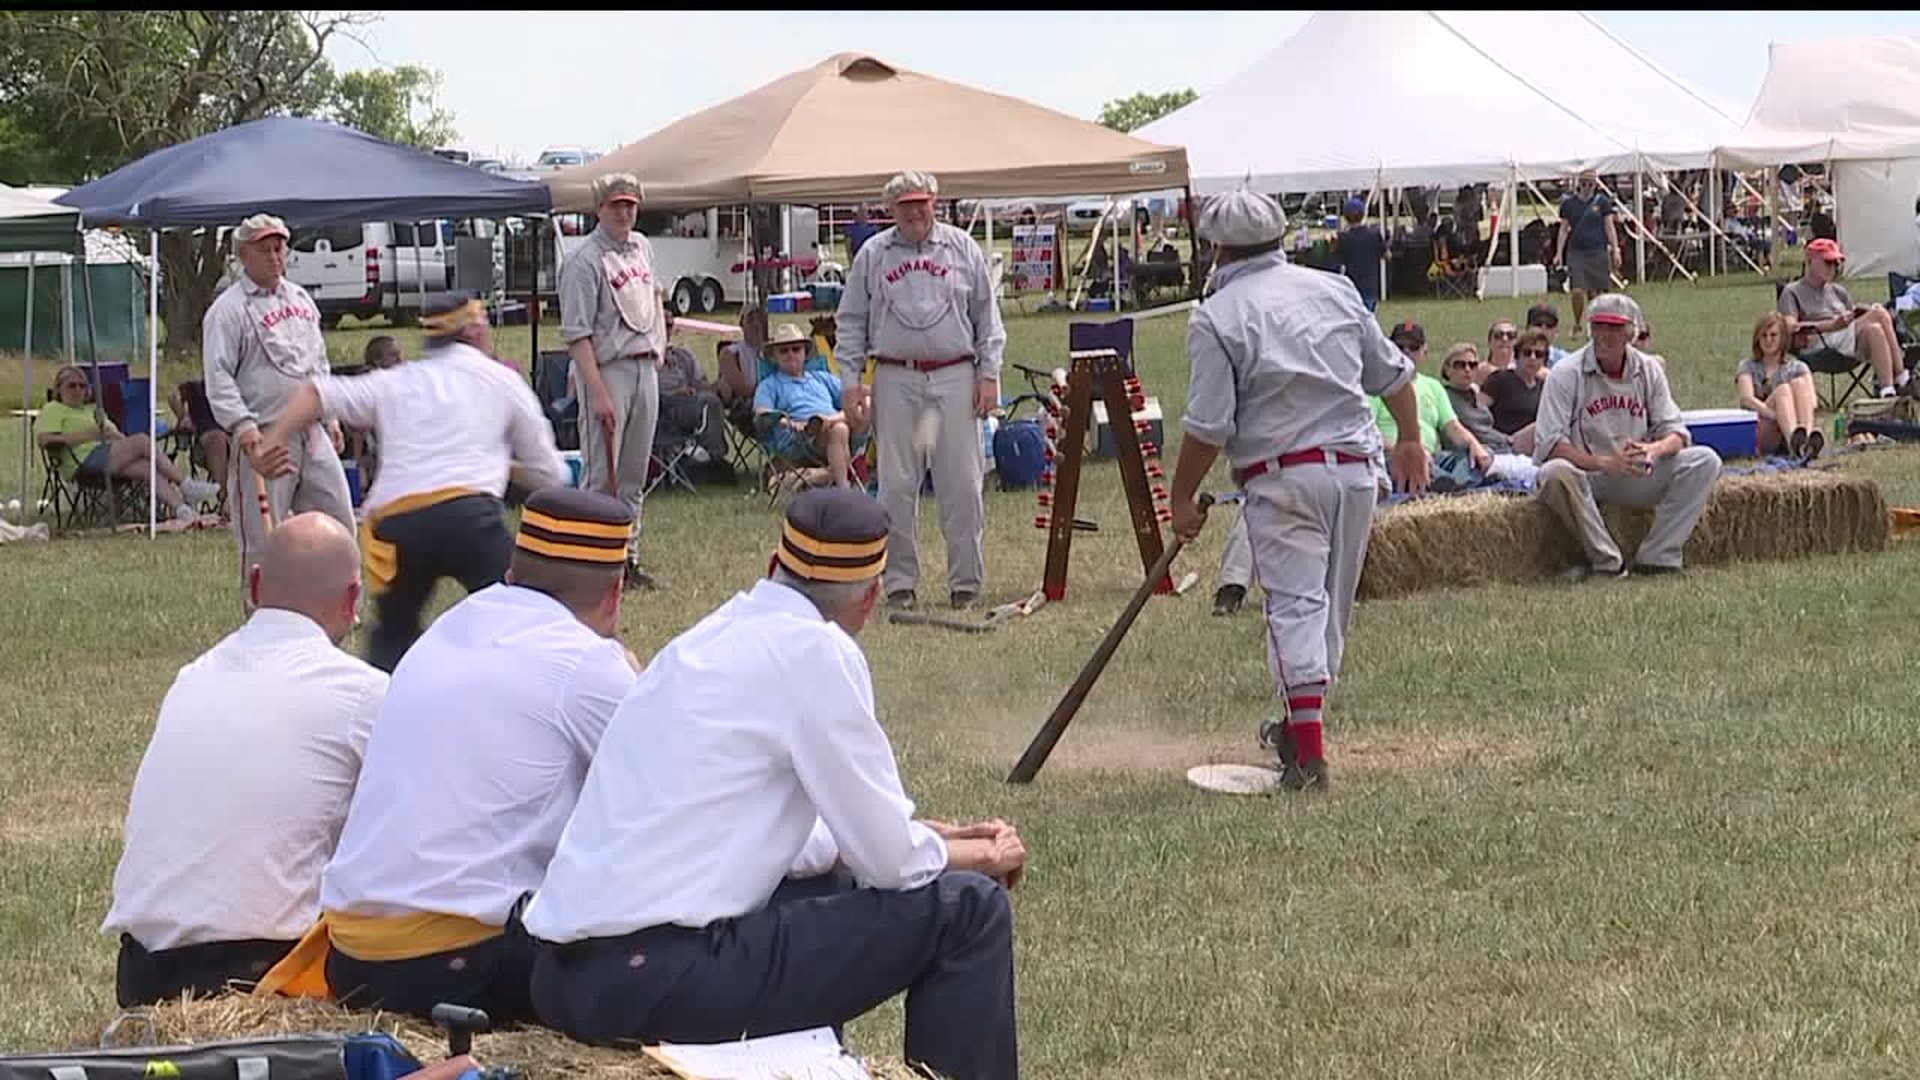 19th Century baseball festival takes over Adams County